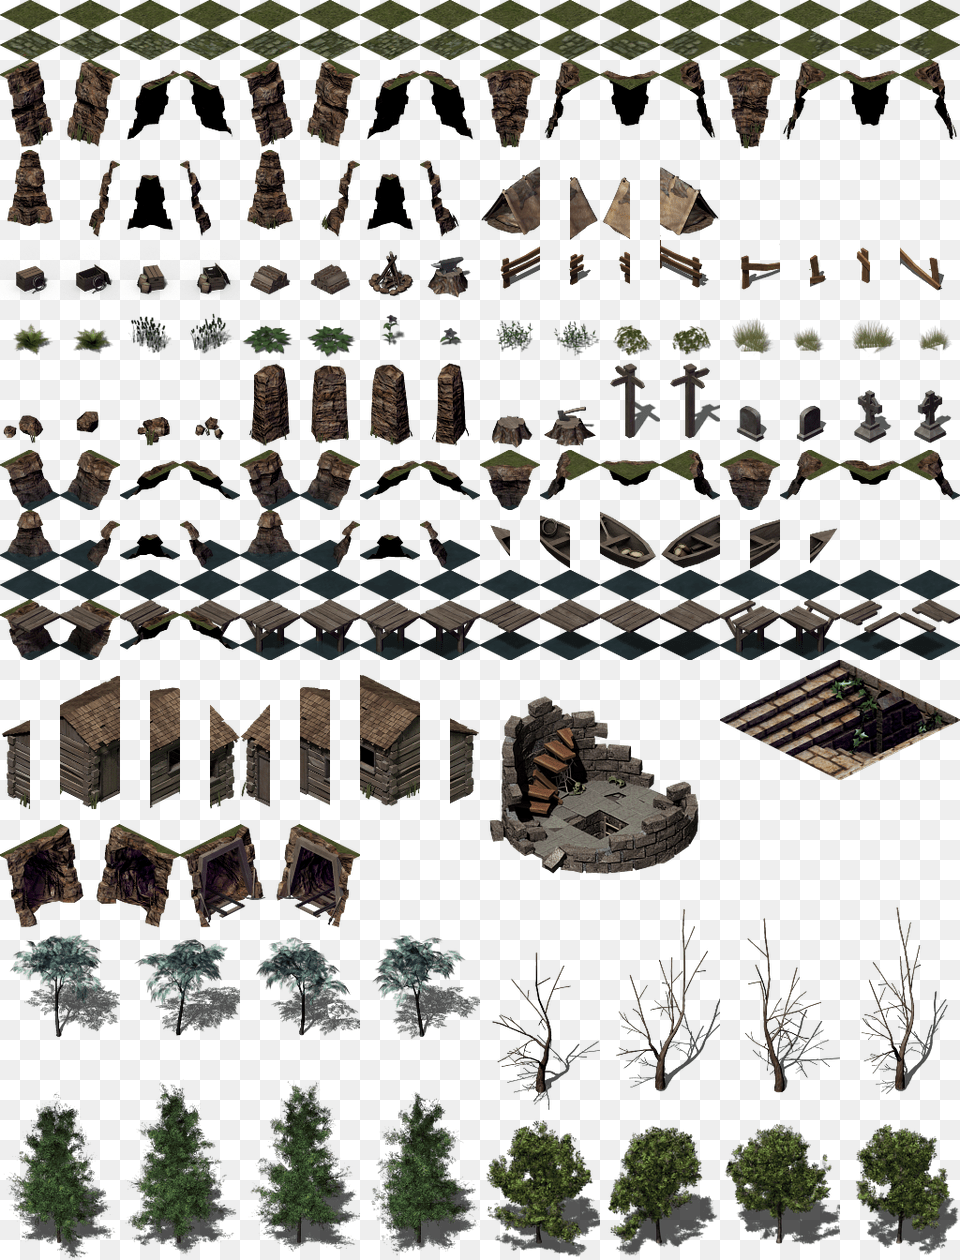 Grassland Tiles Tiled Snow Map, Plant, Tree, Fir, Architecture Png Image